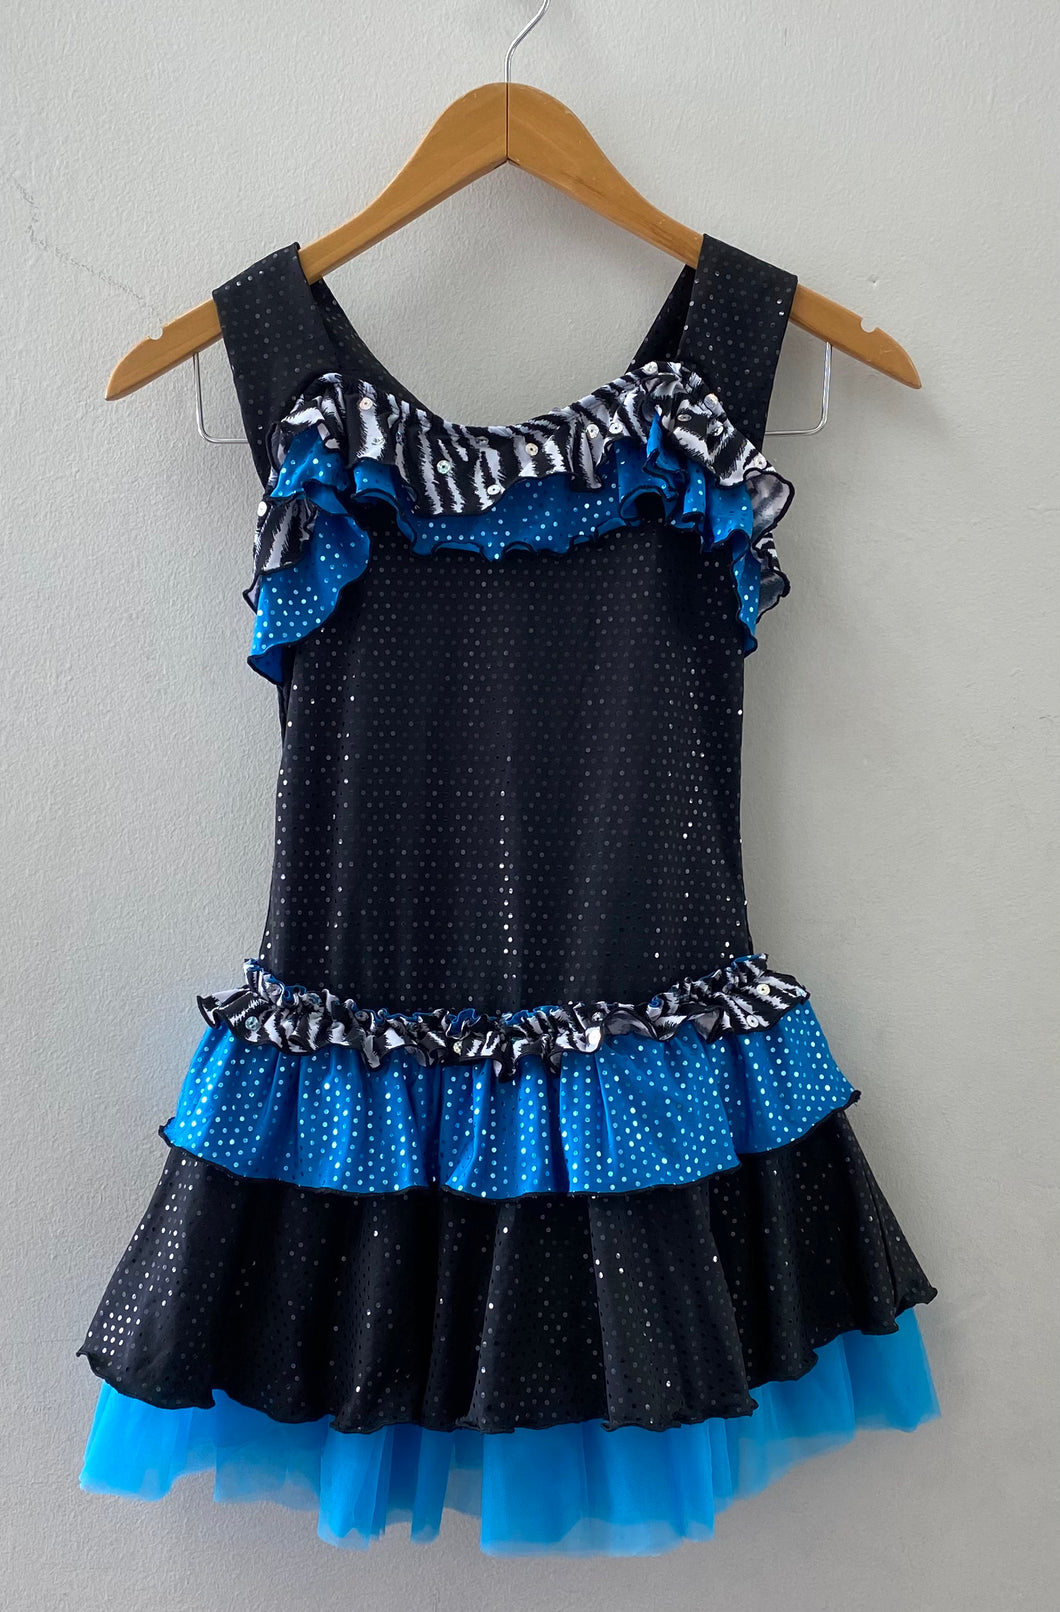 Black & Blue Dress with Zebra Print Details